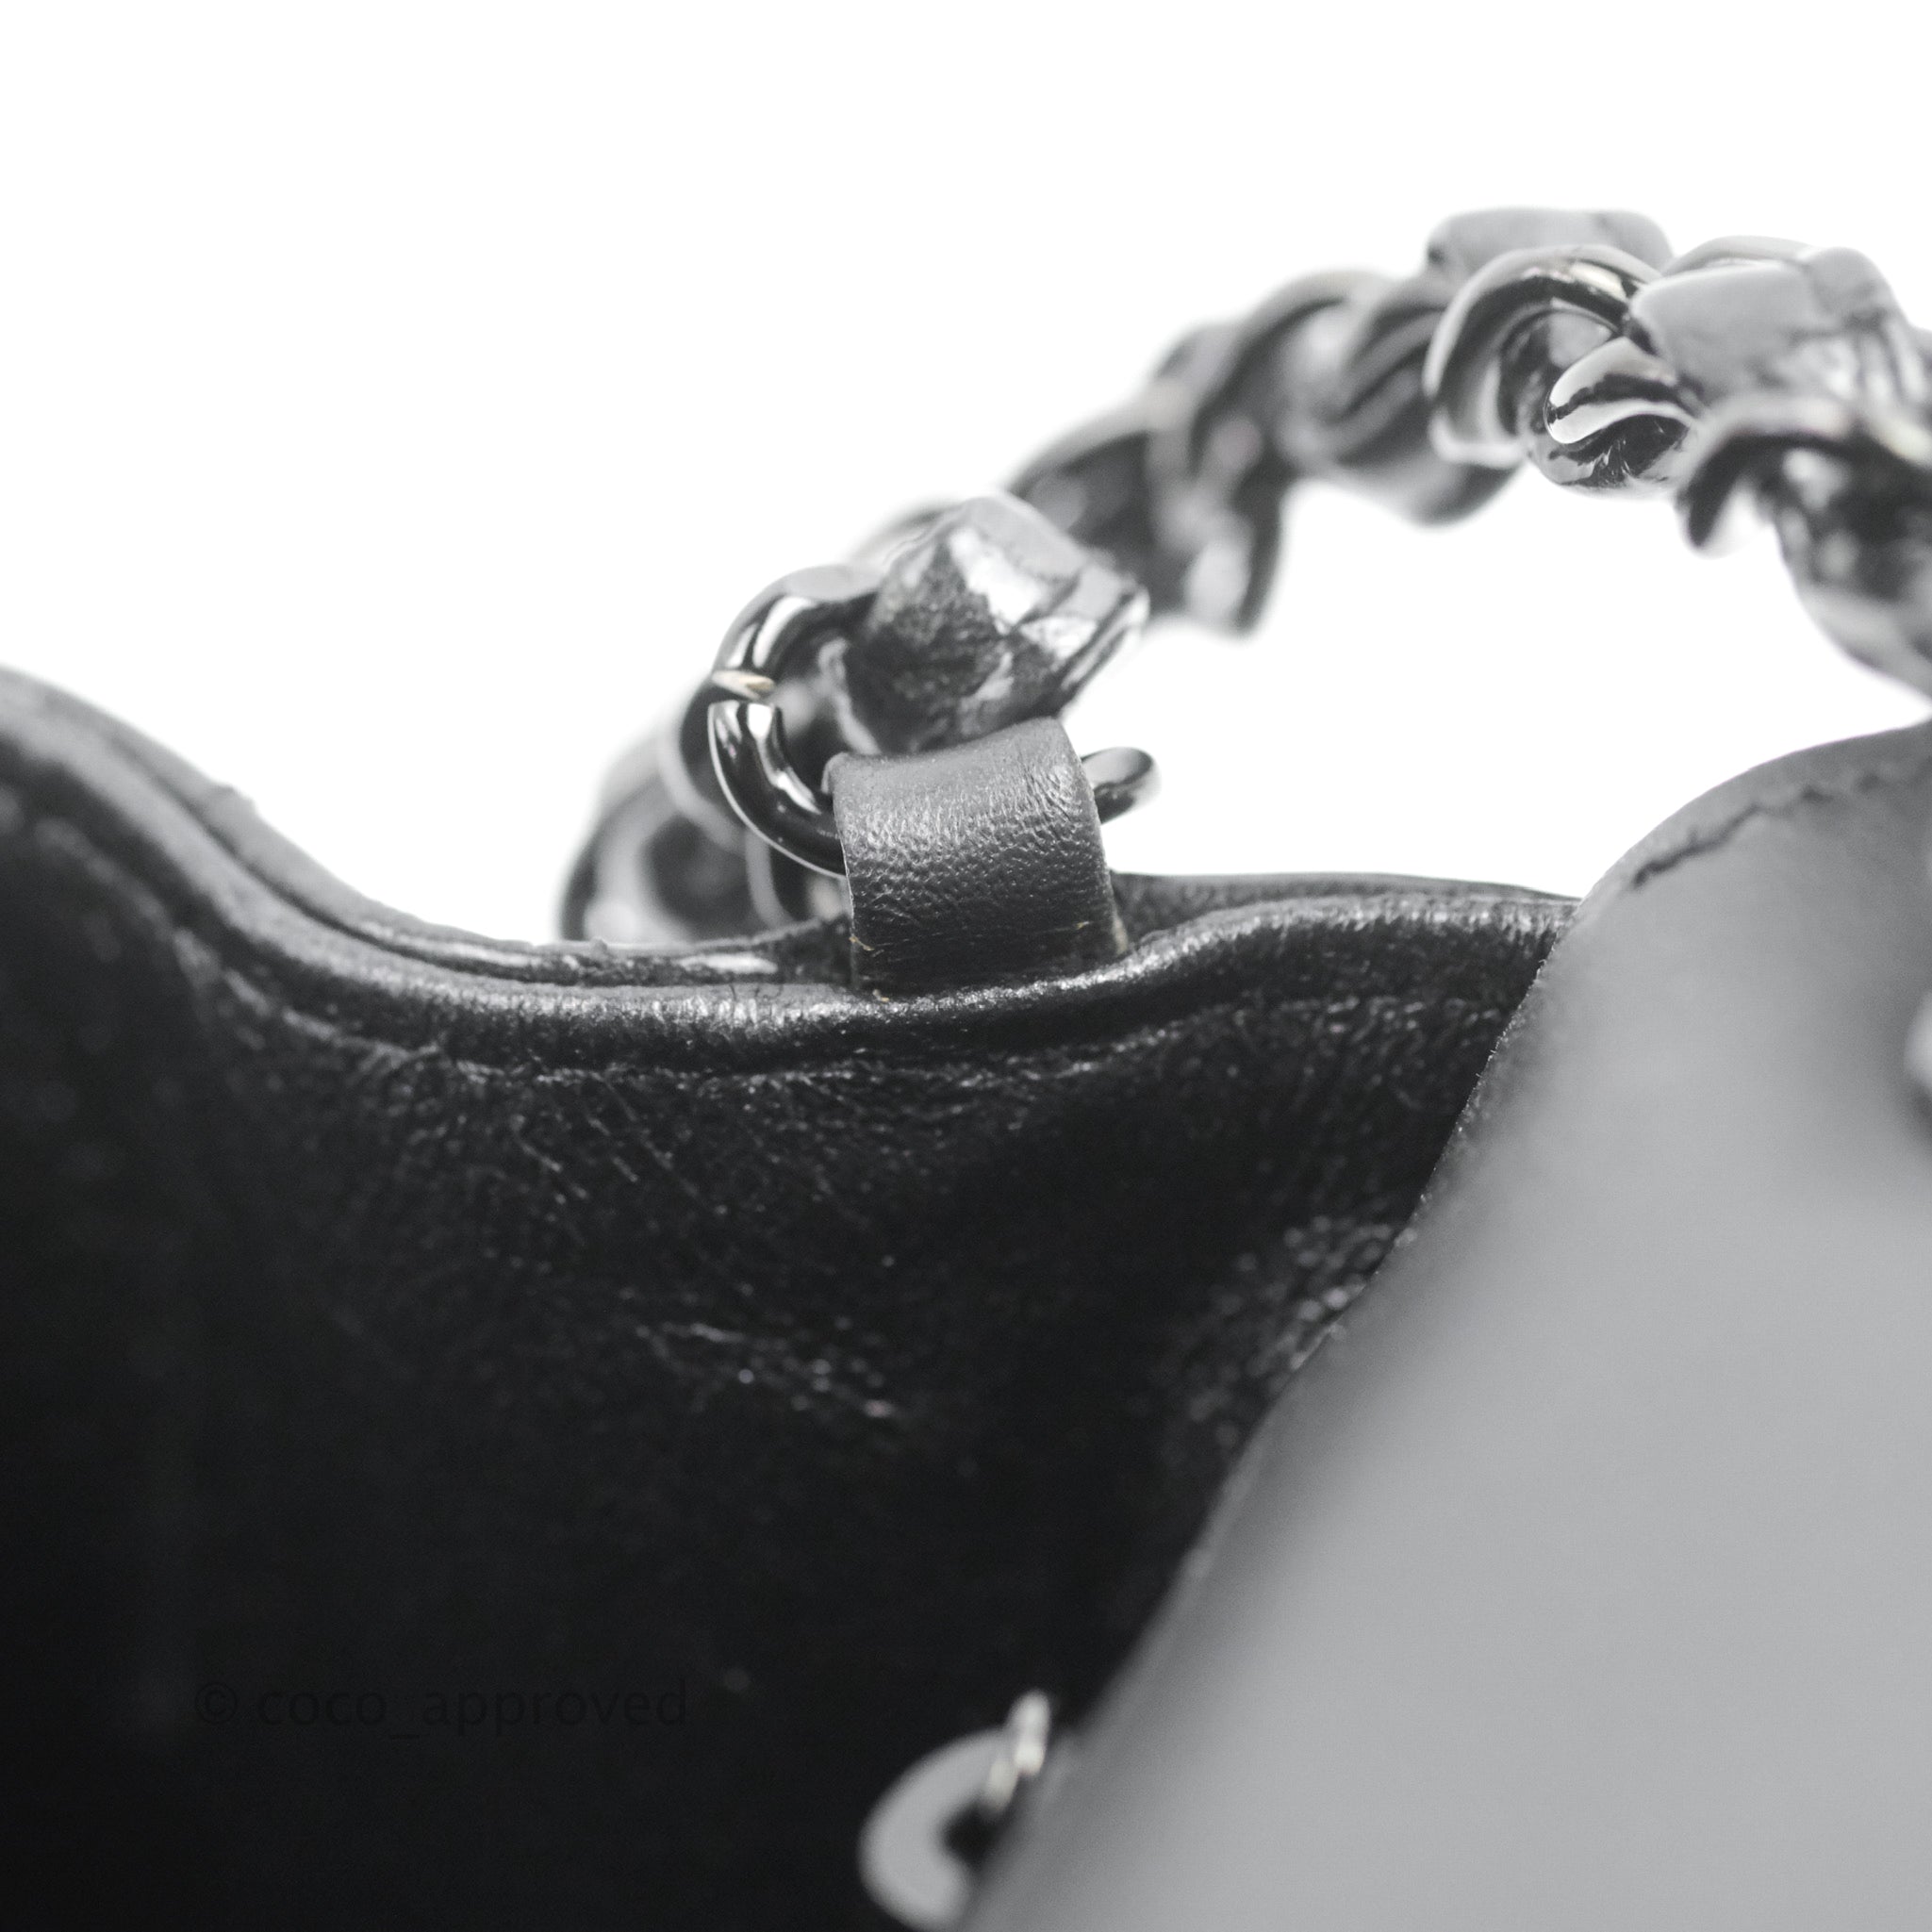 Chanel Lambskin Chevron Quilted Mini Rectangular Flap So Black